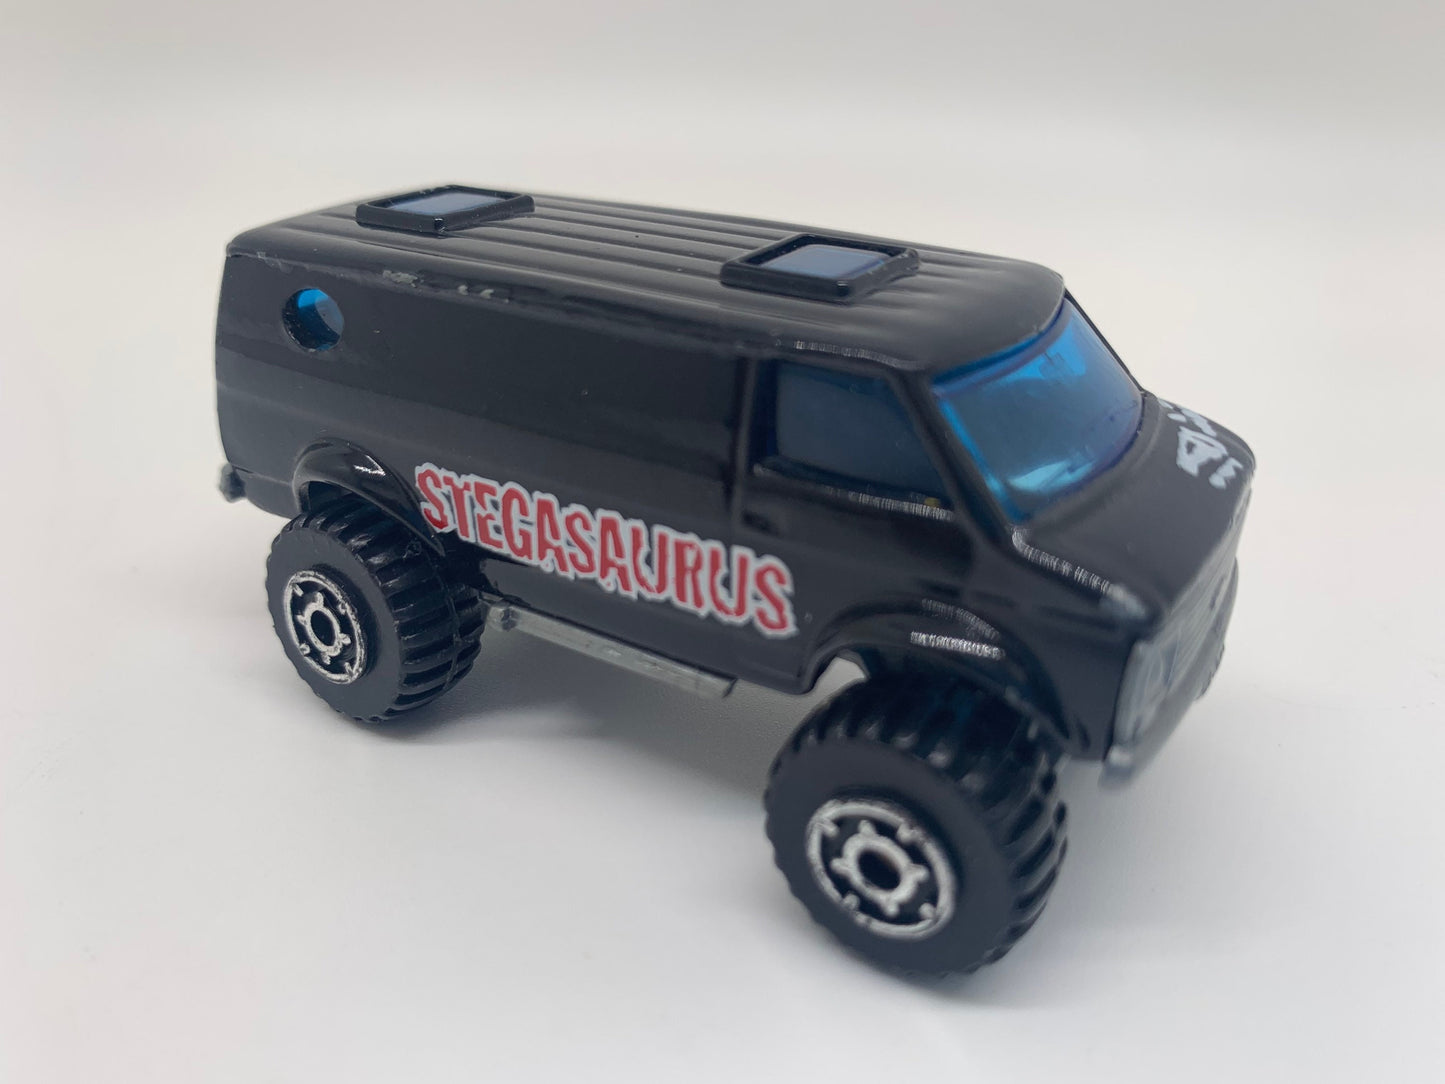 4x4 Chevy Van - STEGASAURUS - Dino Riders - Diecast Vintage - Diecast Collectible - Miniature Model Toy Car - Matchbox Car - Matchbox